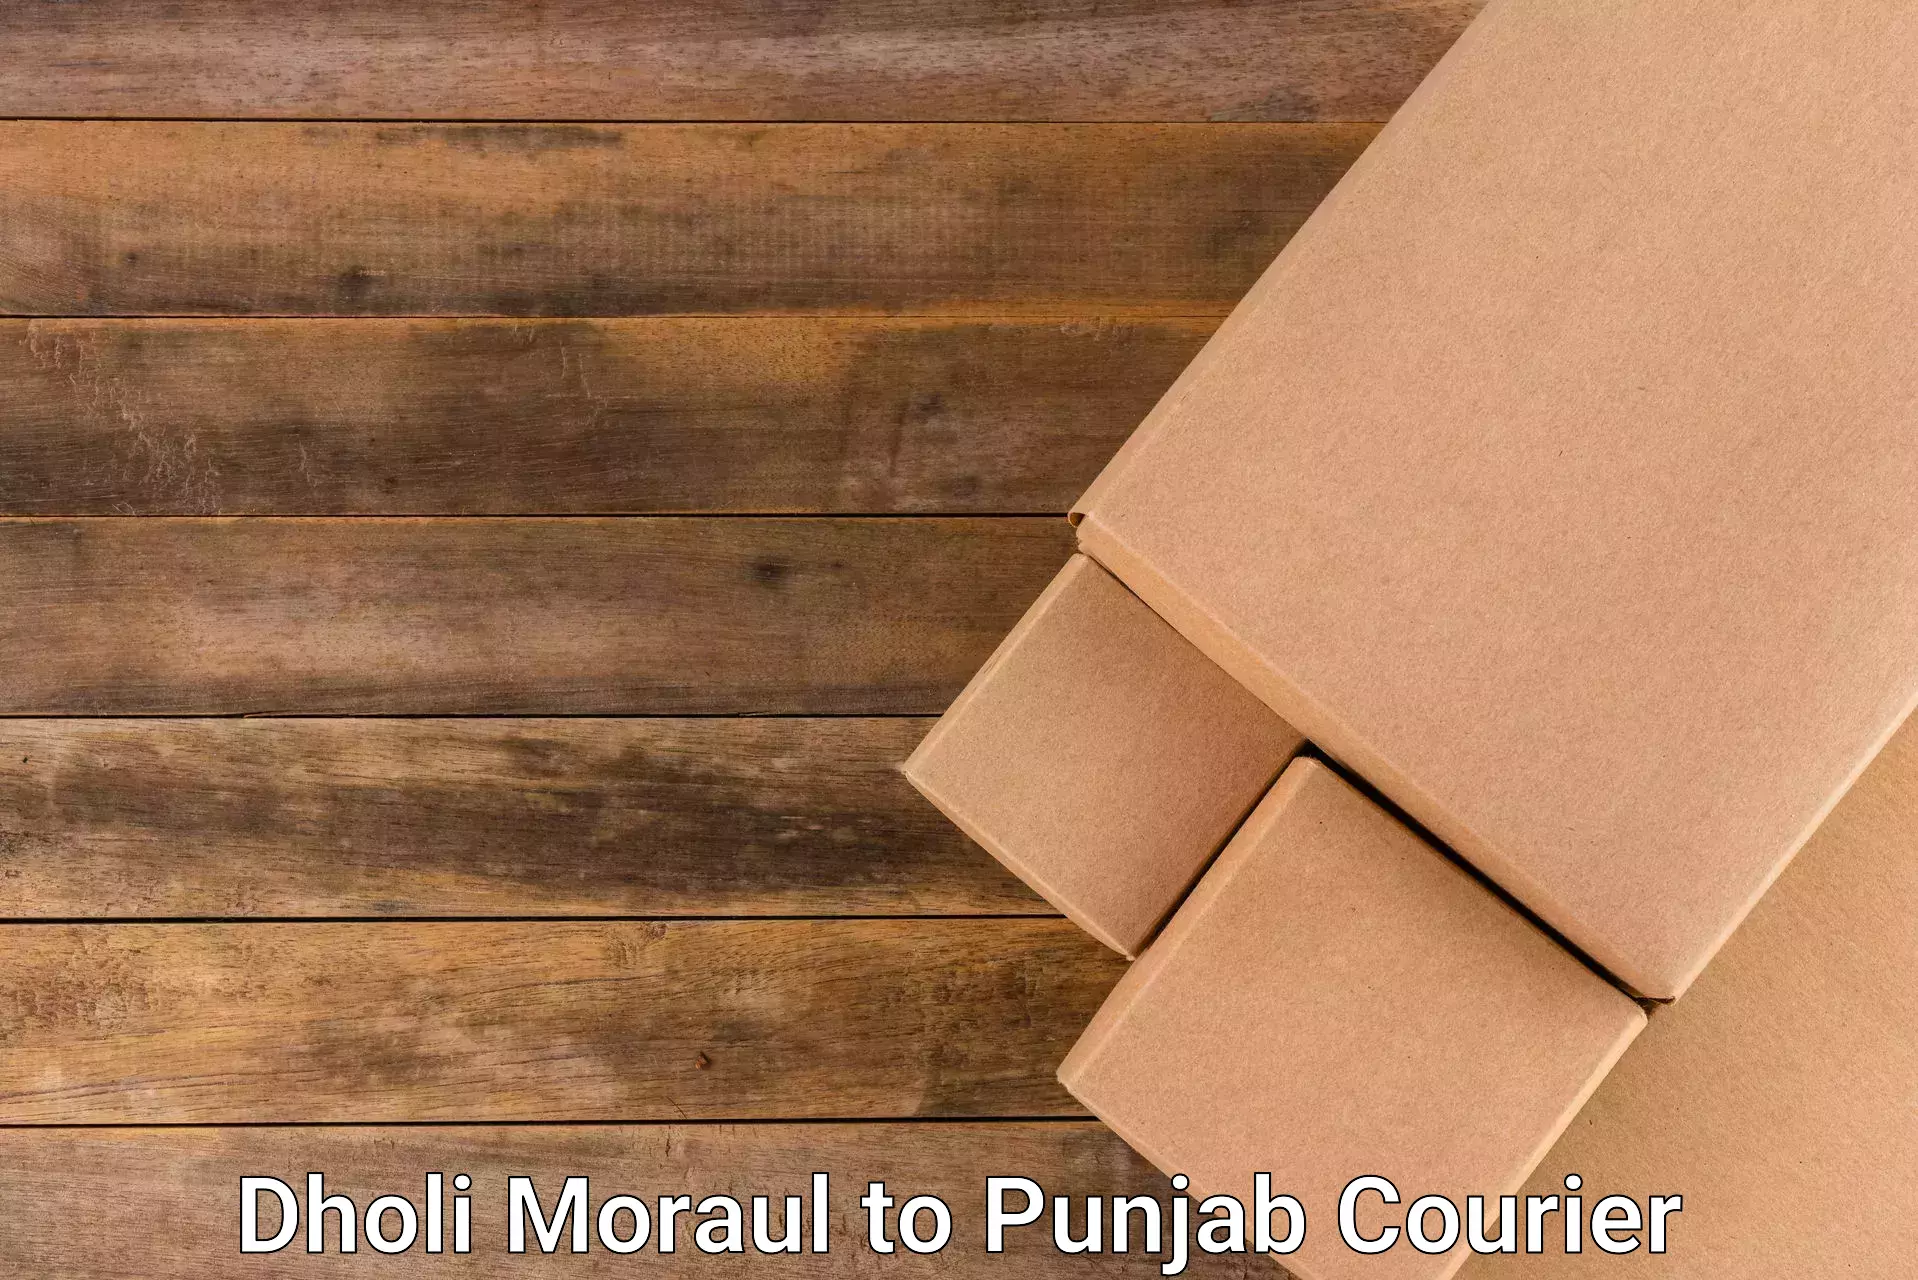 Express logistics service Dholi Moraul to Punjab